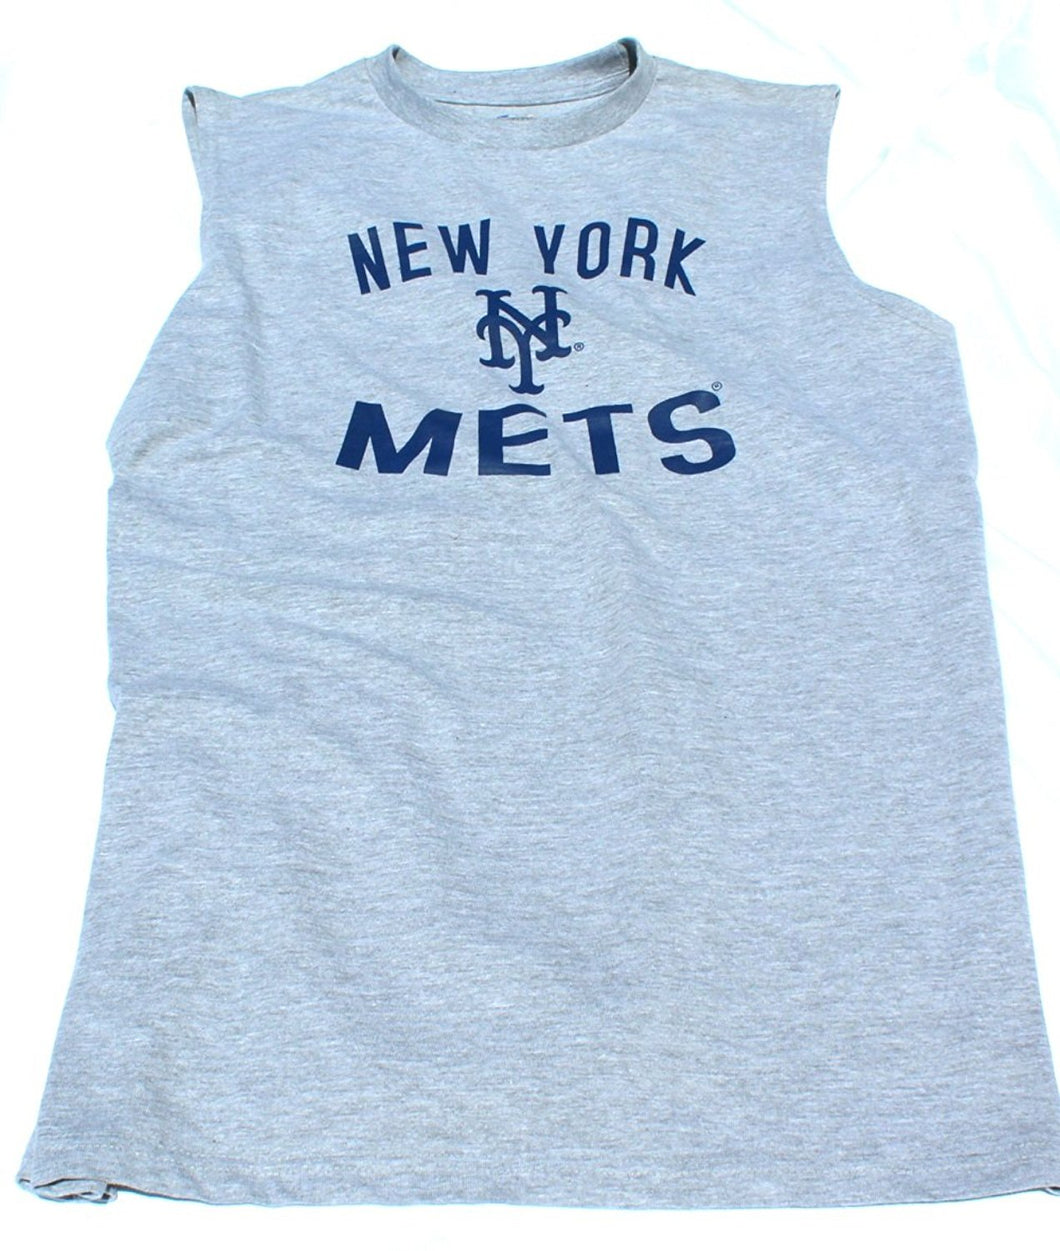 Mens Sleeveless Tee-Shirt,New York Mets Size LT